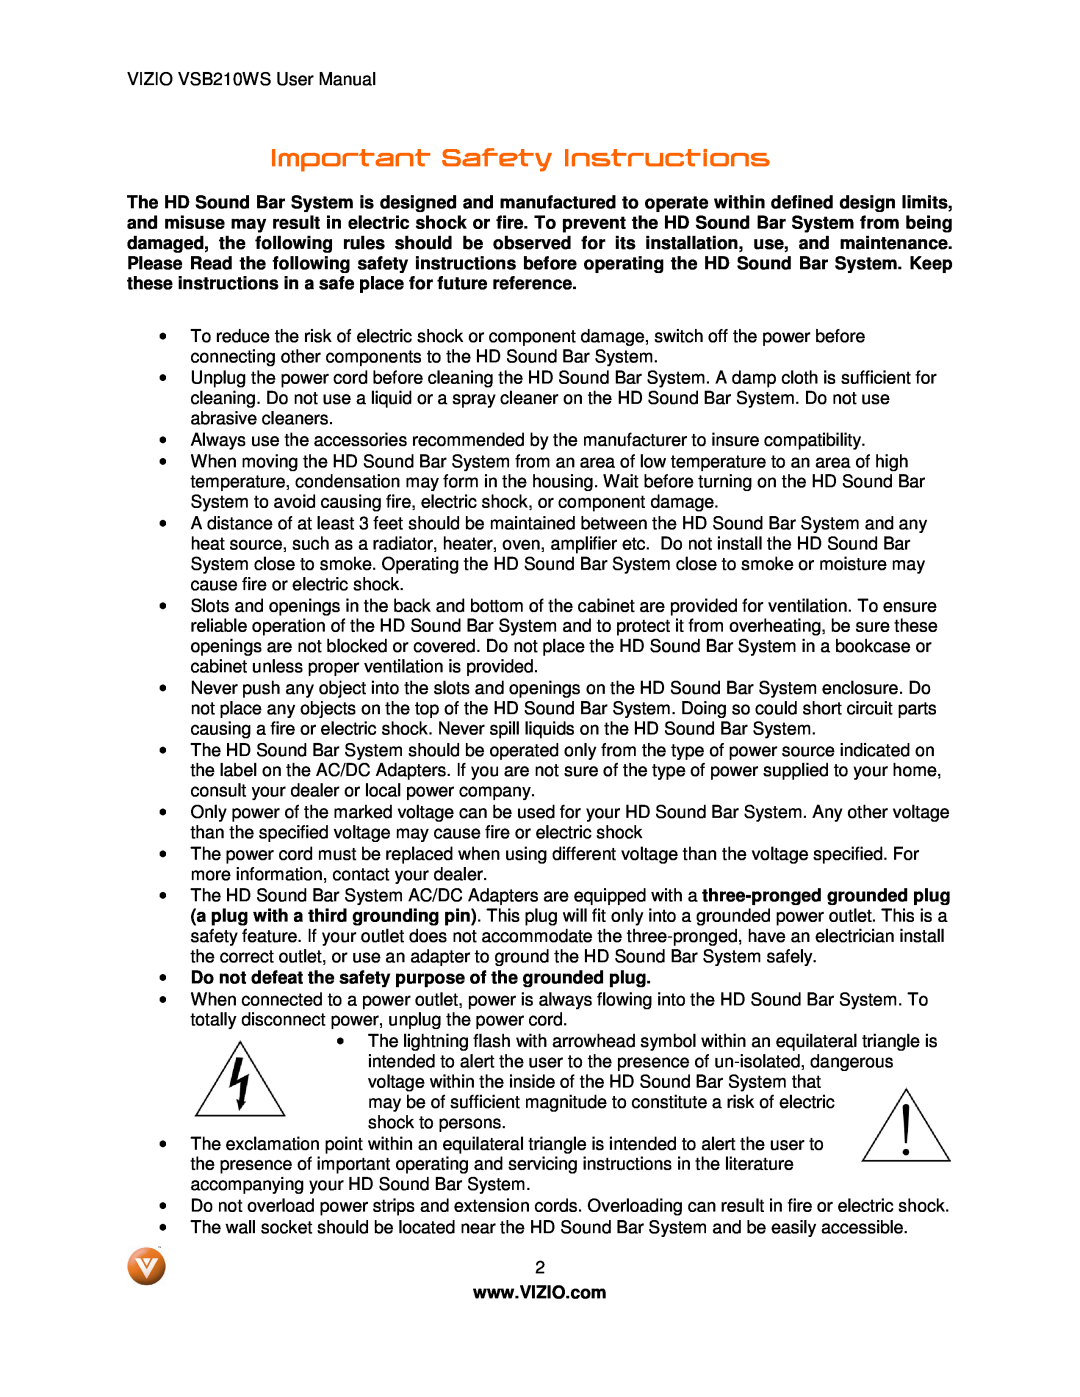 Vizio VSB210WS user manual Important Safety Instructions 